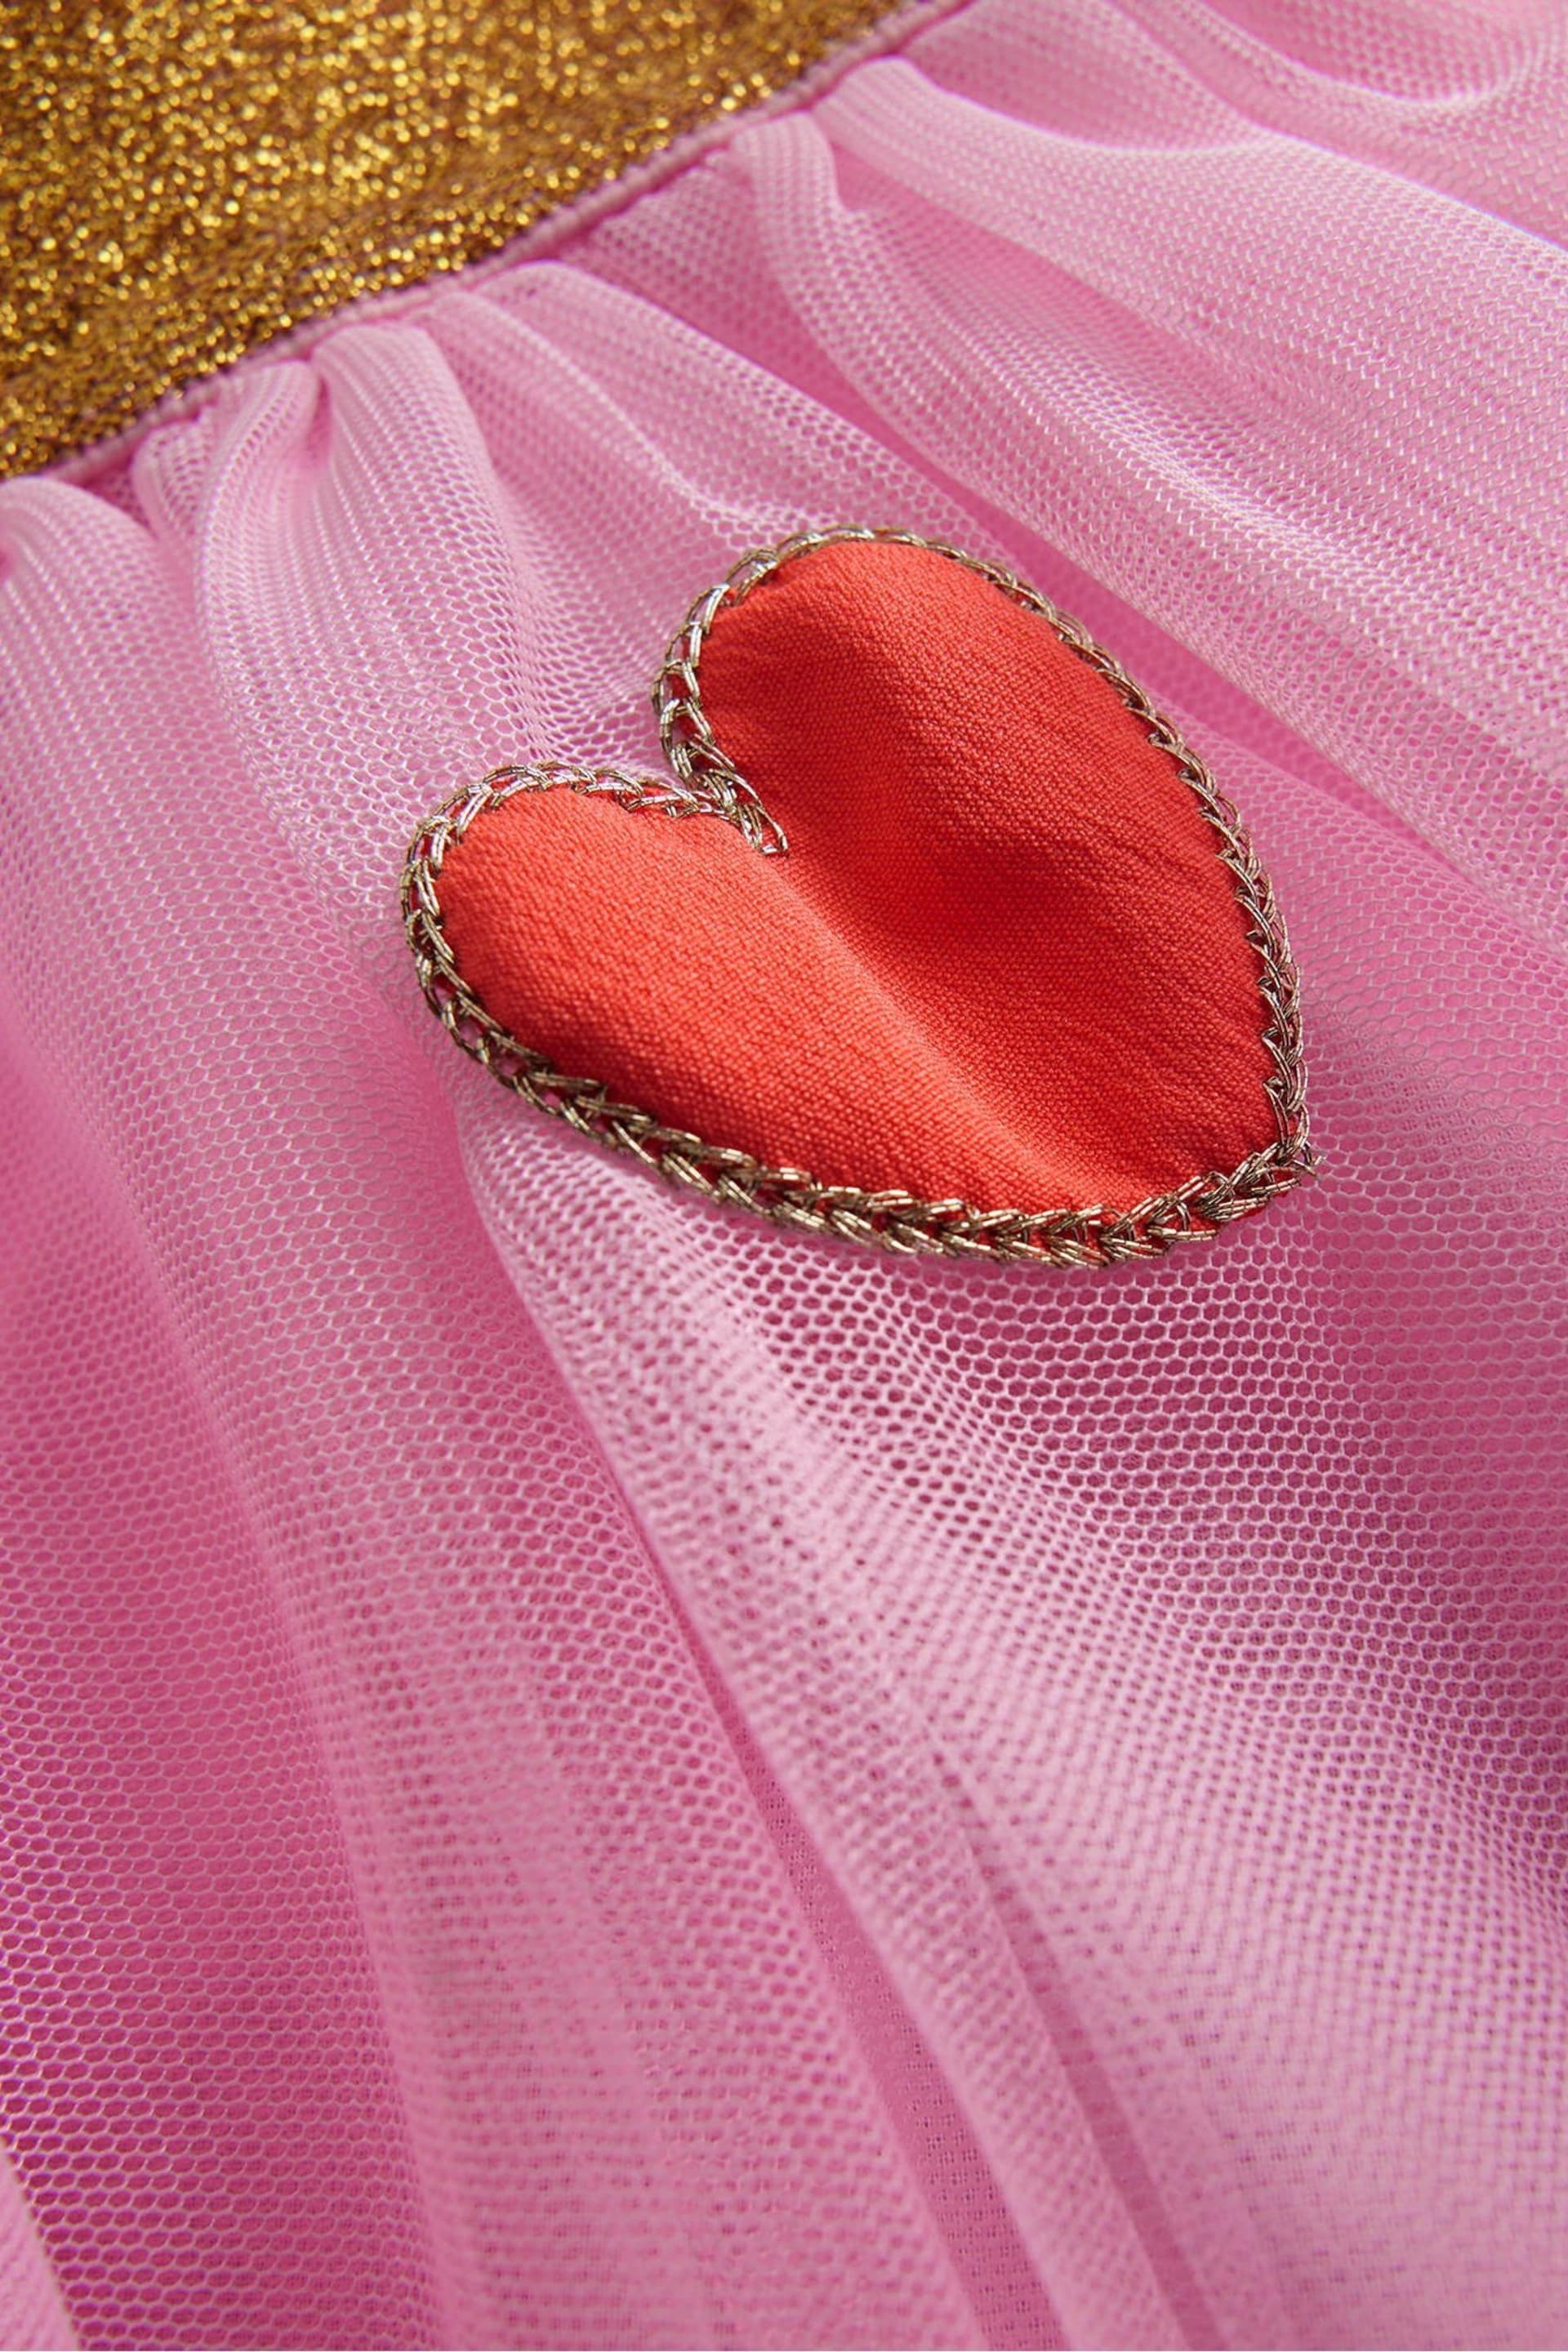 Boden Red Heart Tulle Appliqué Skirt - Image 4 of 4